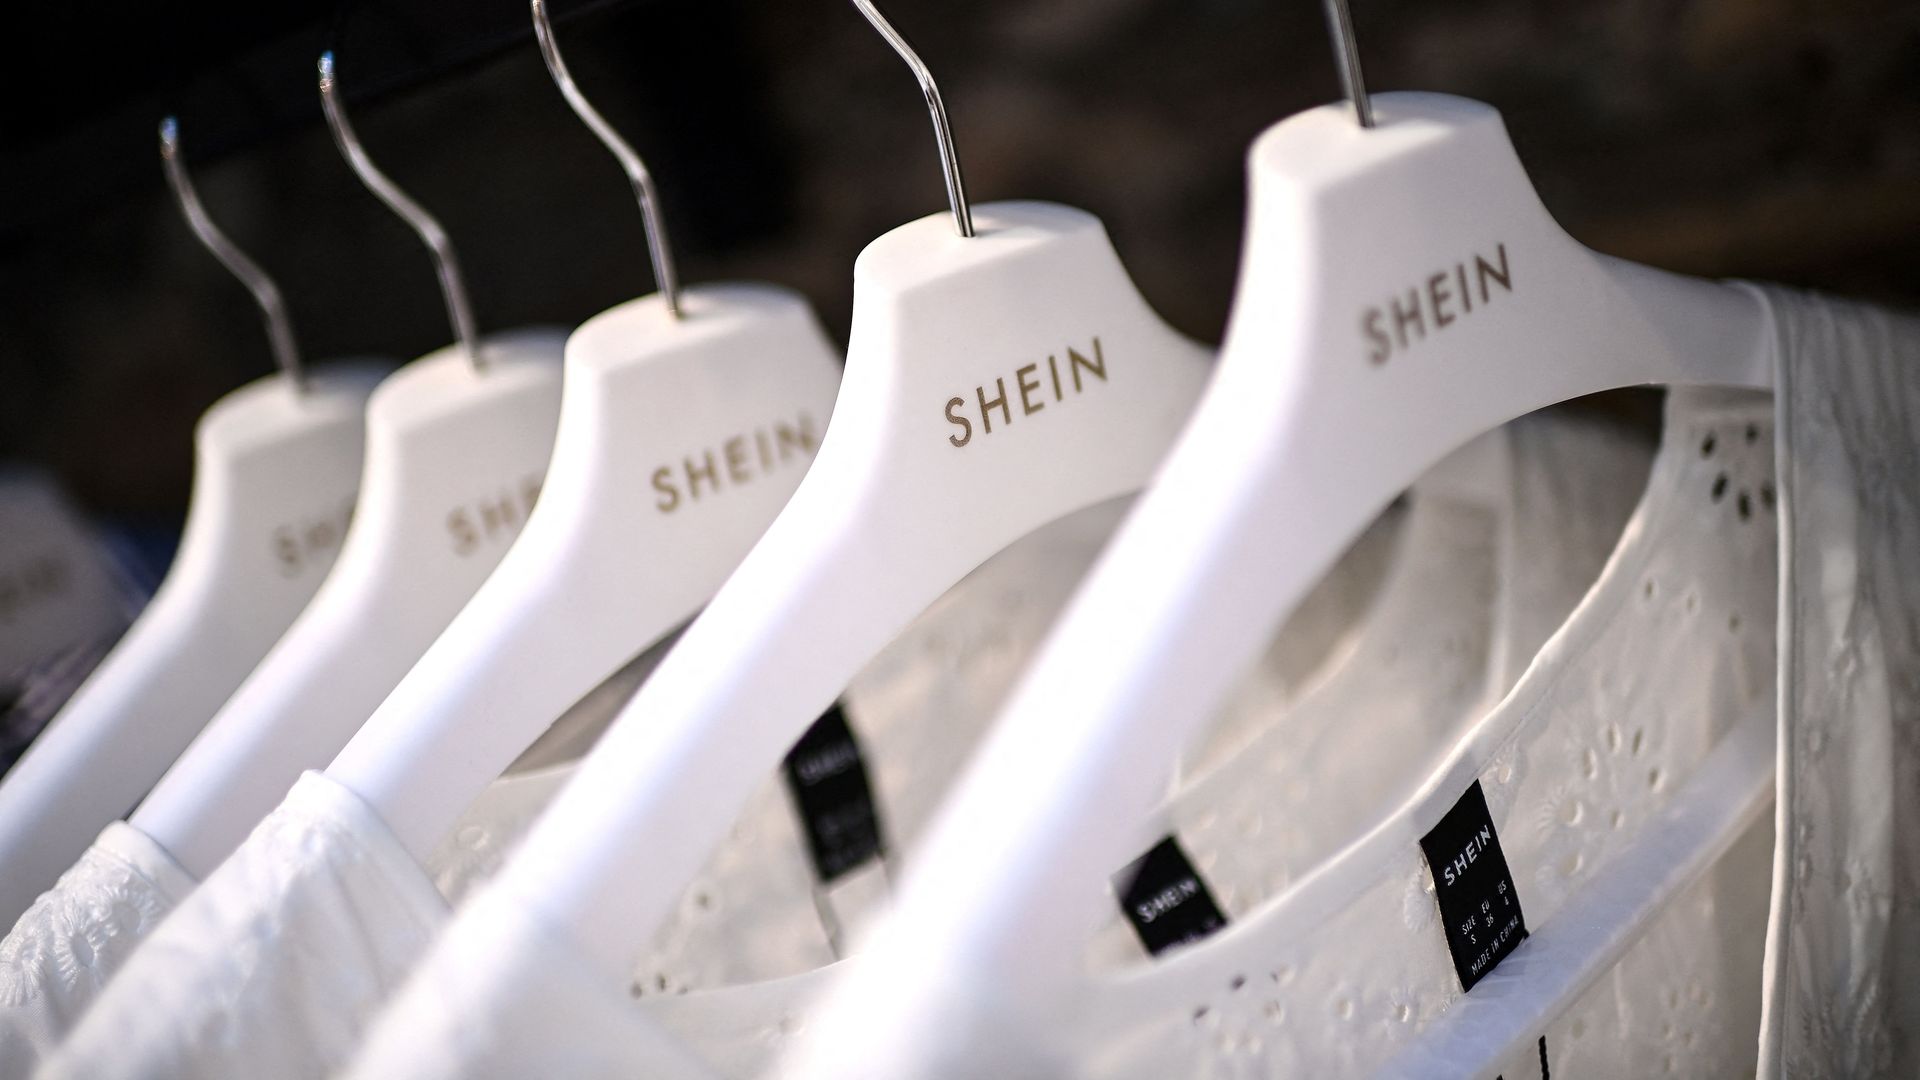 Shein attempts makeover under a barrage of criticism